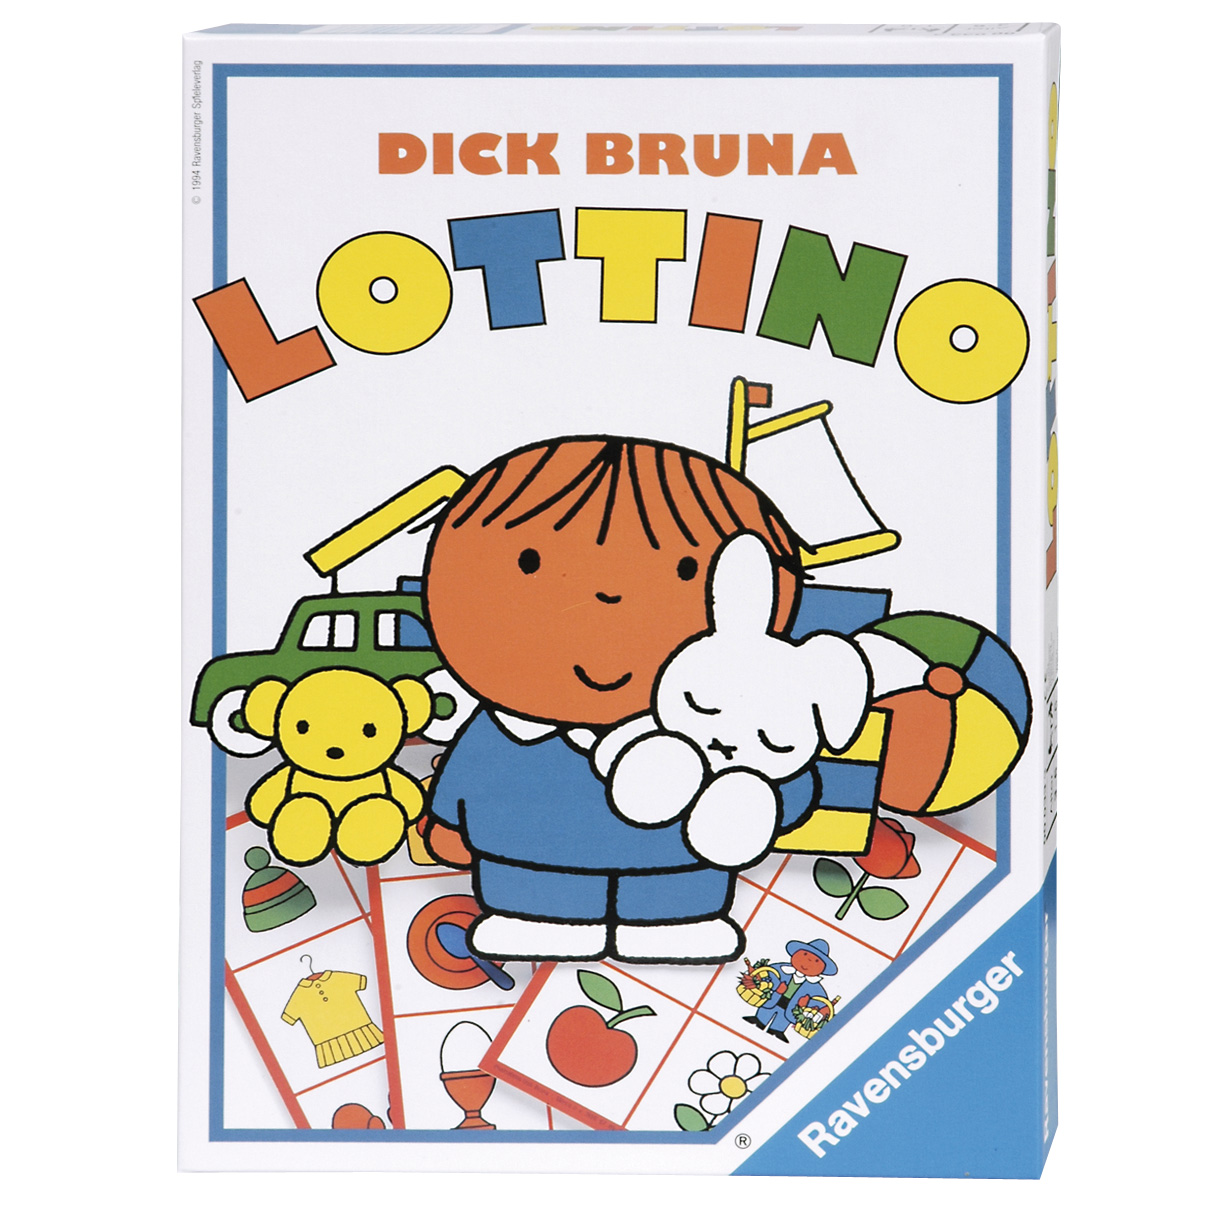 Lottino Dick Bruna